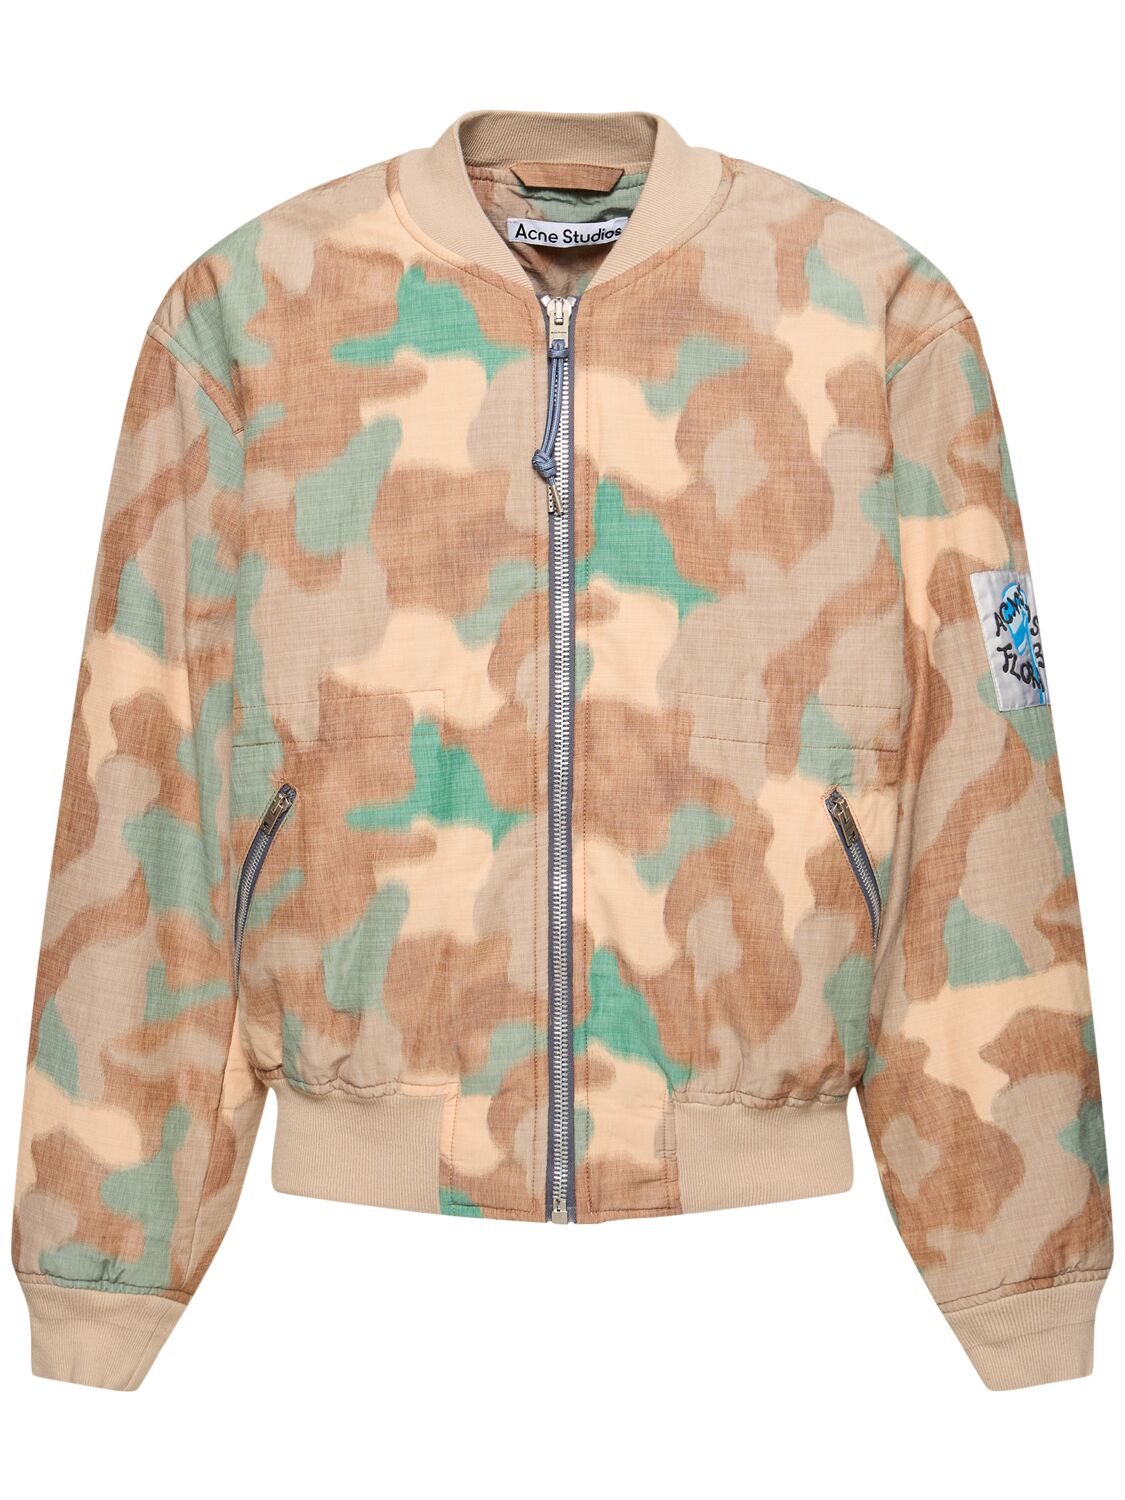 Oleary Camouflage Cotton Bomber Jacket